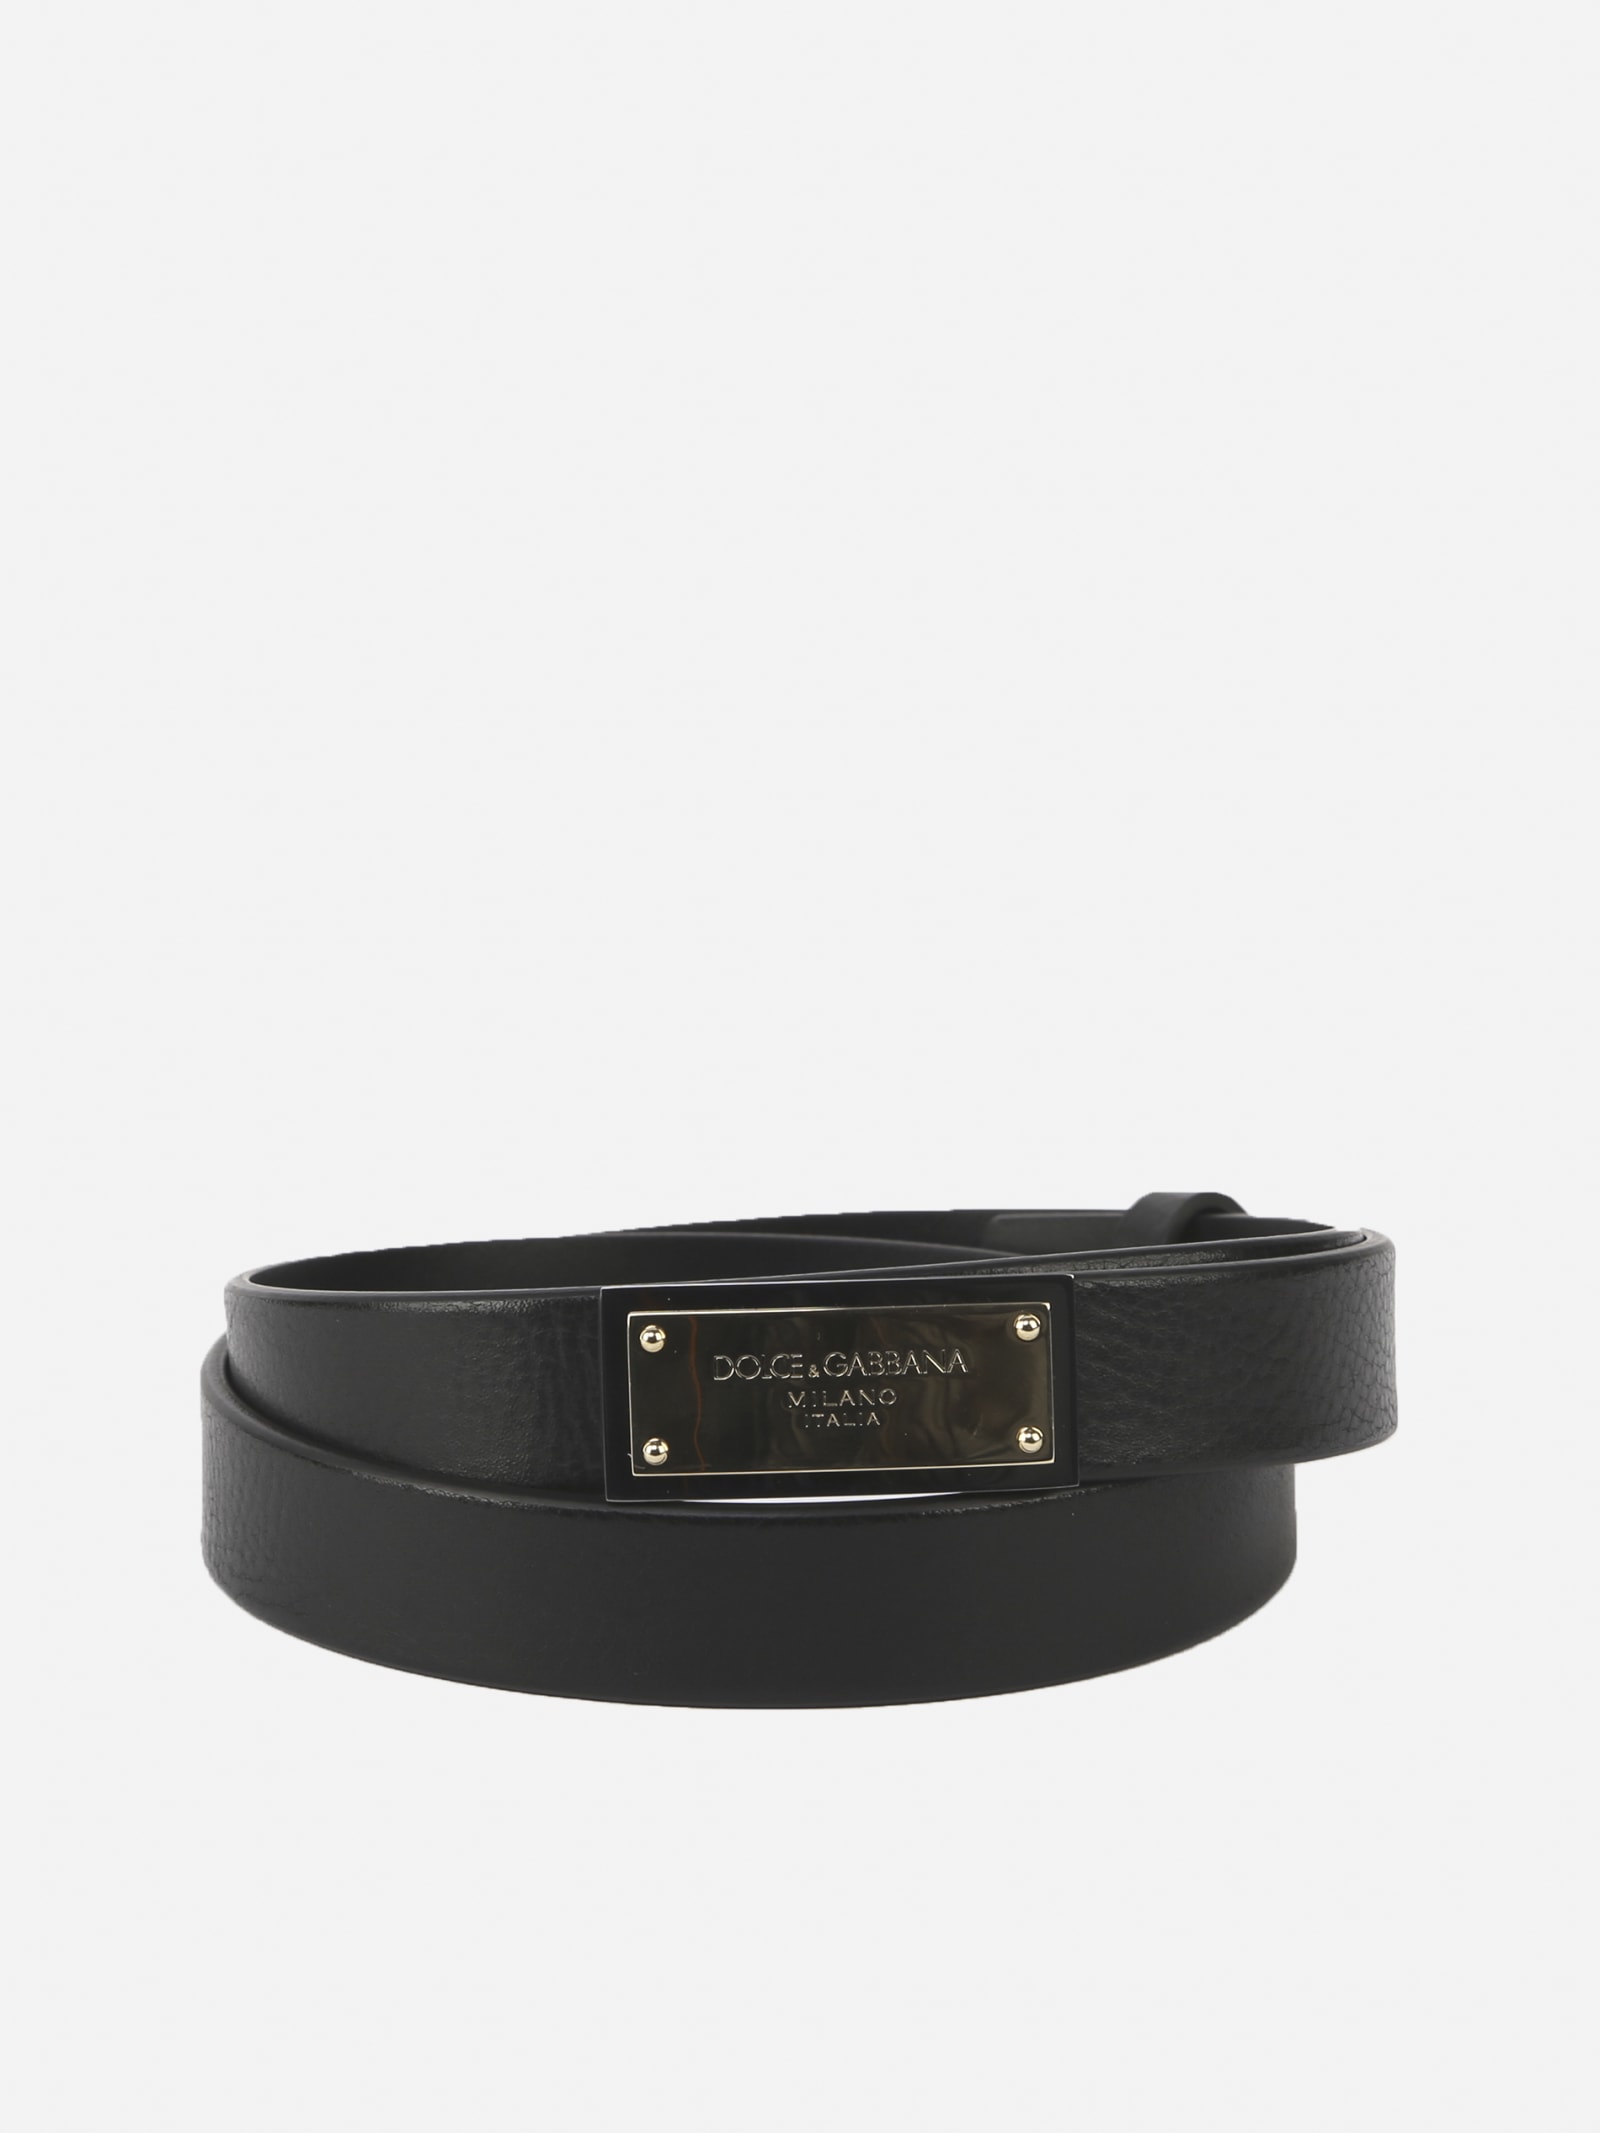 Dolce & Gabbana Tumbled Leather Belt